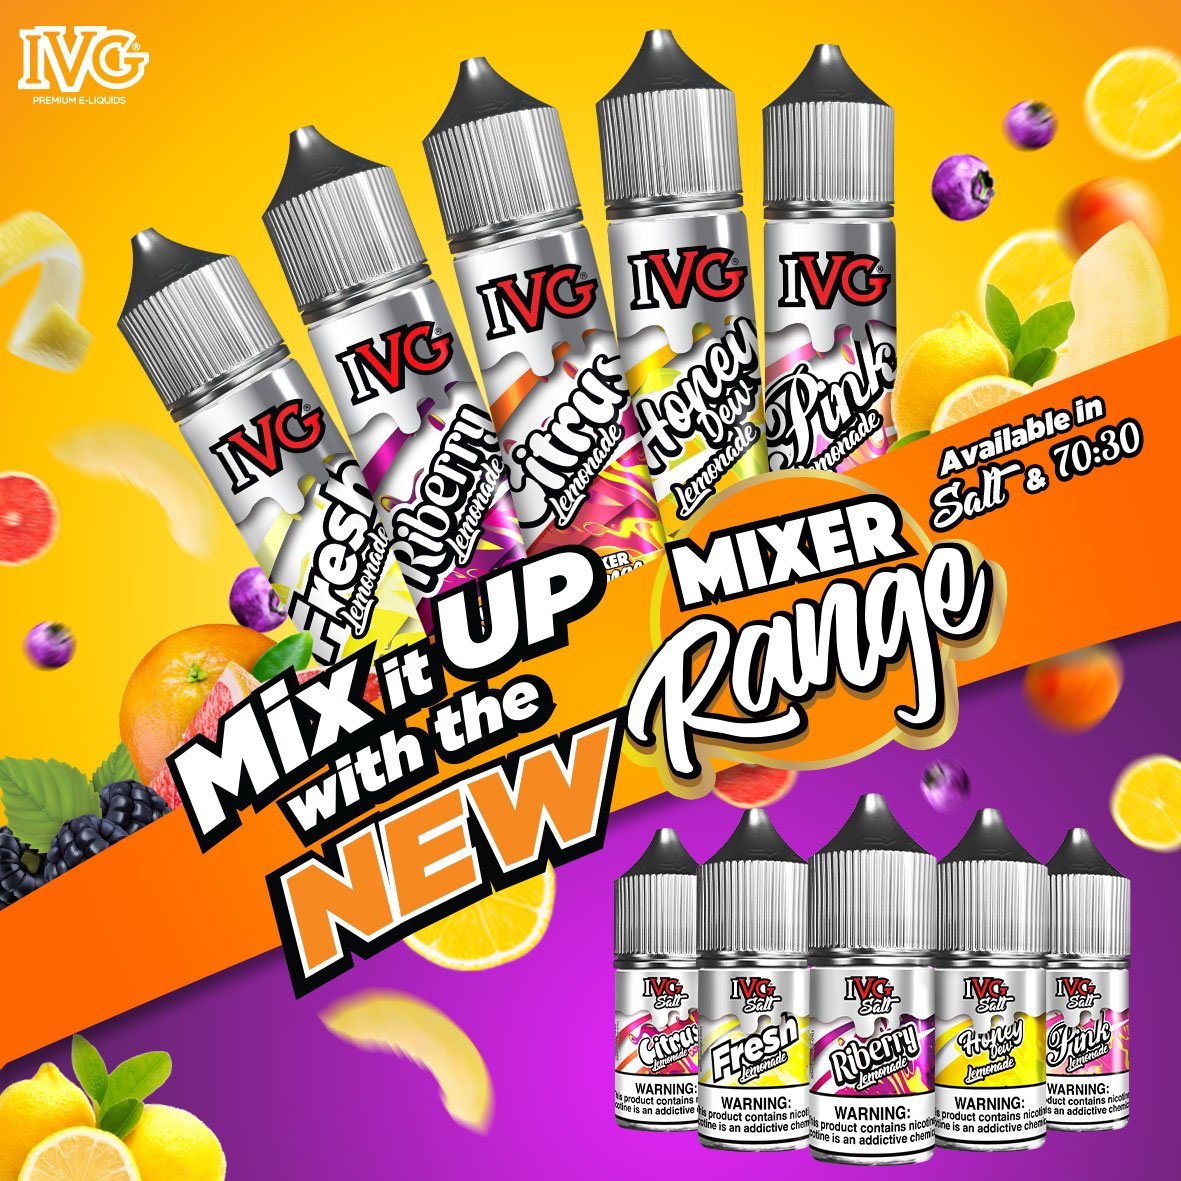 IVG Mixer Range Vape Juice UK Promo